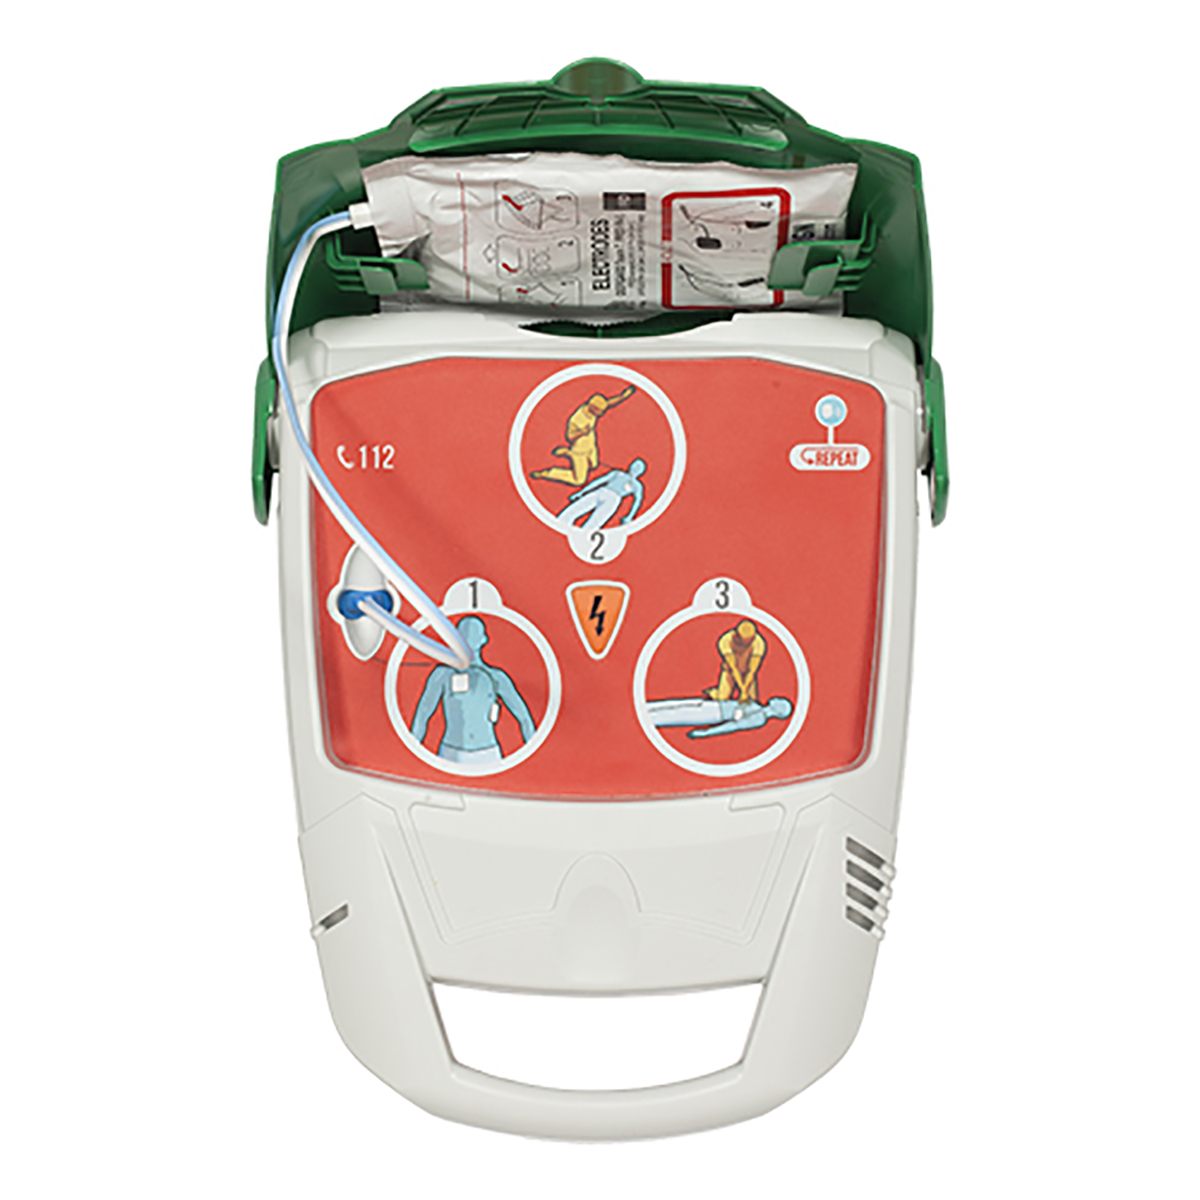 DefiSign Life Semi-Automatic Defibrillator